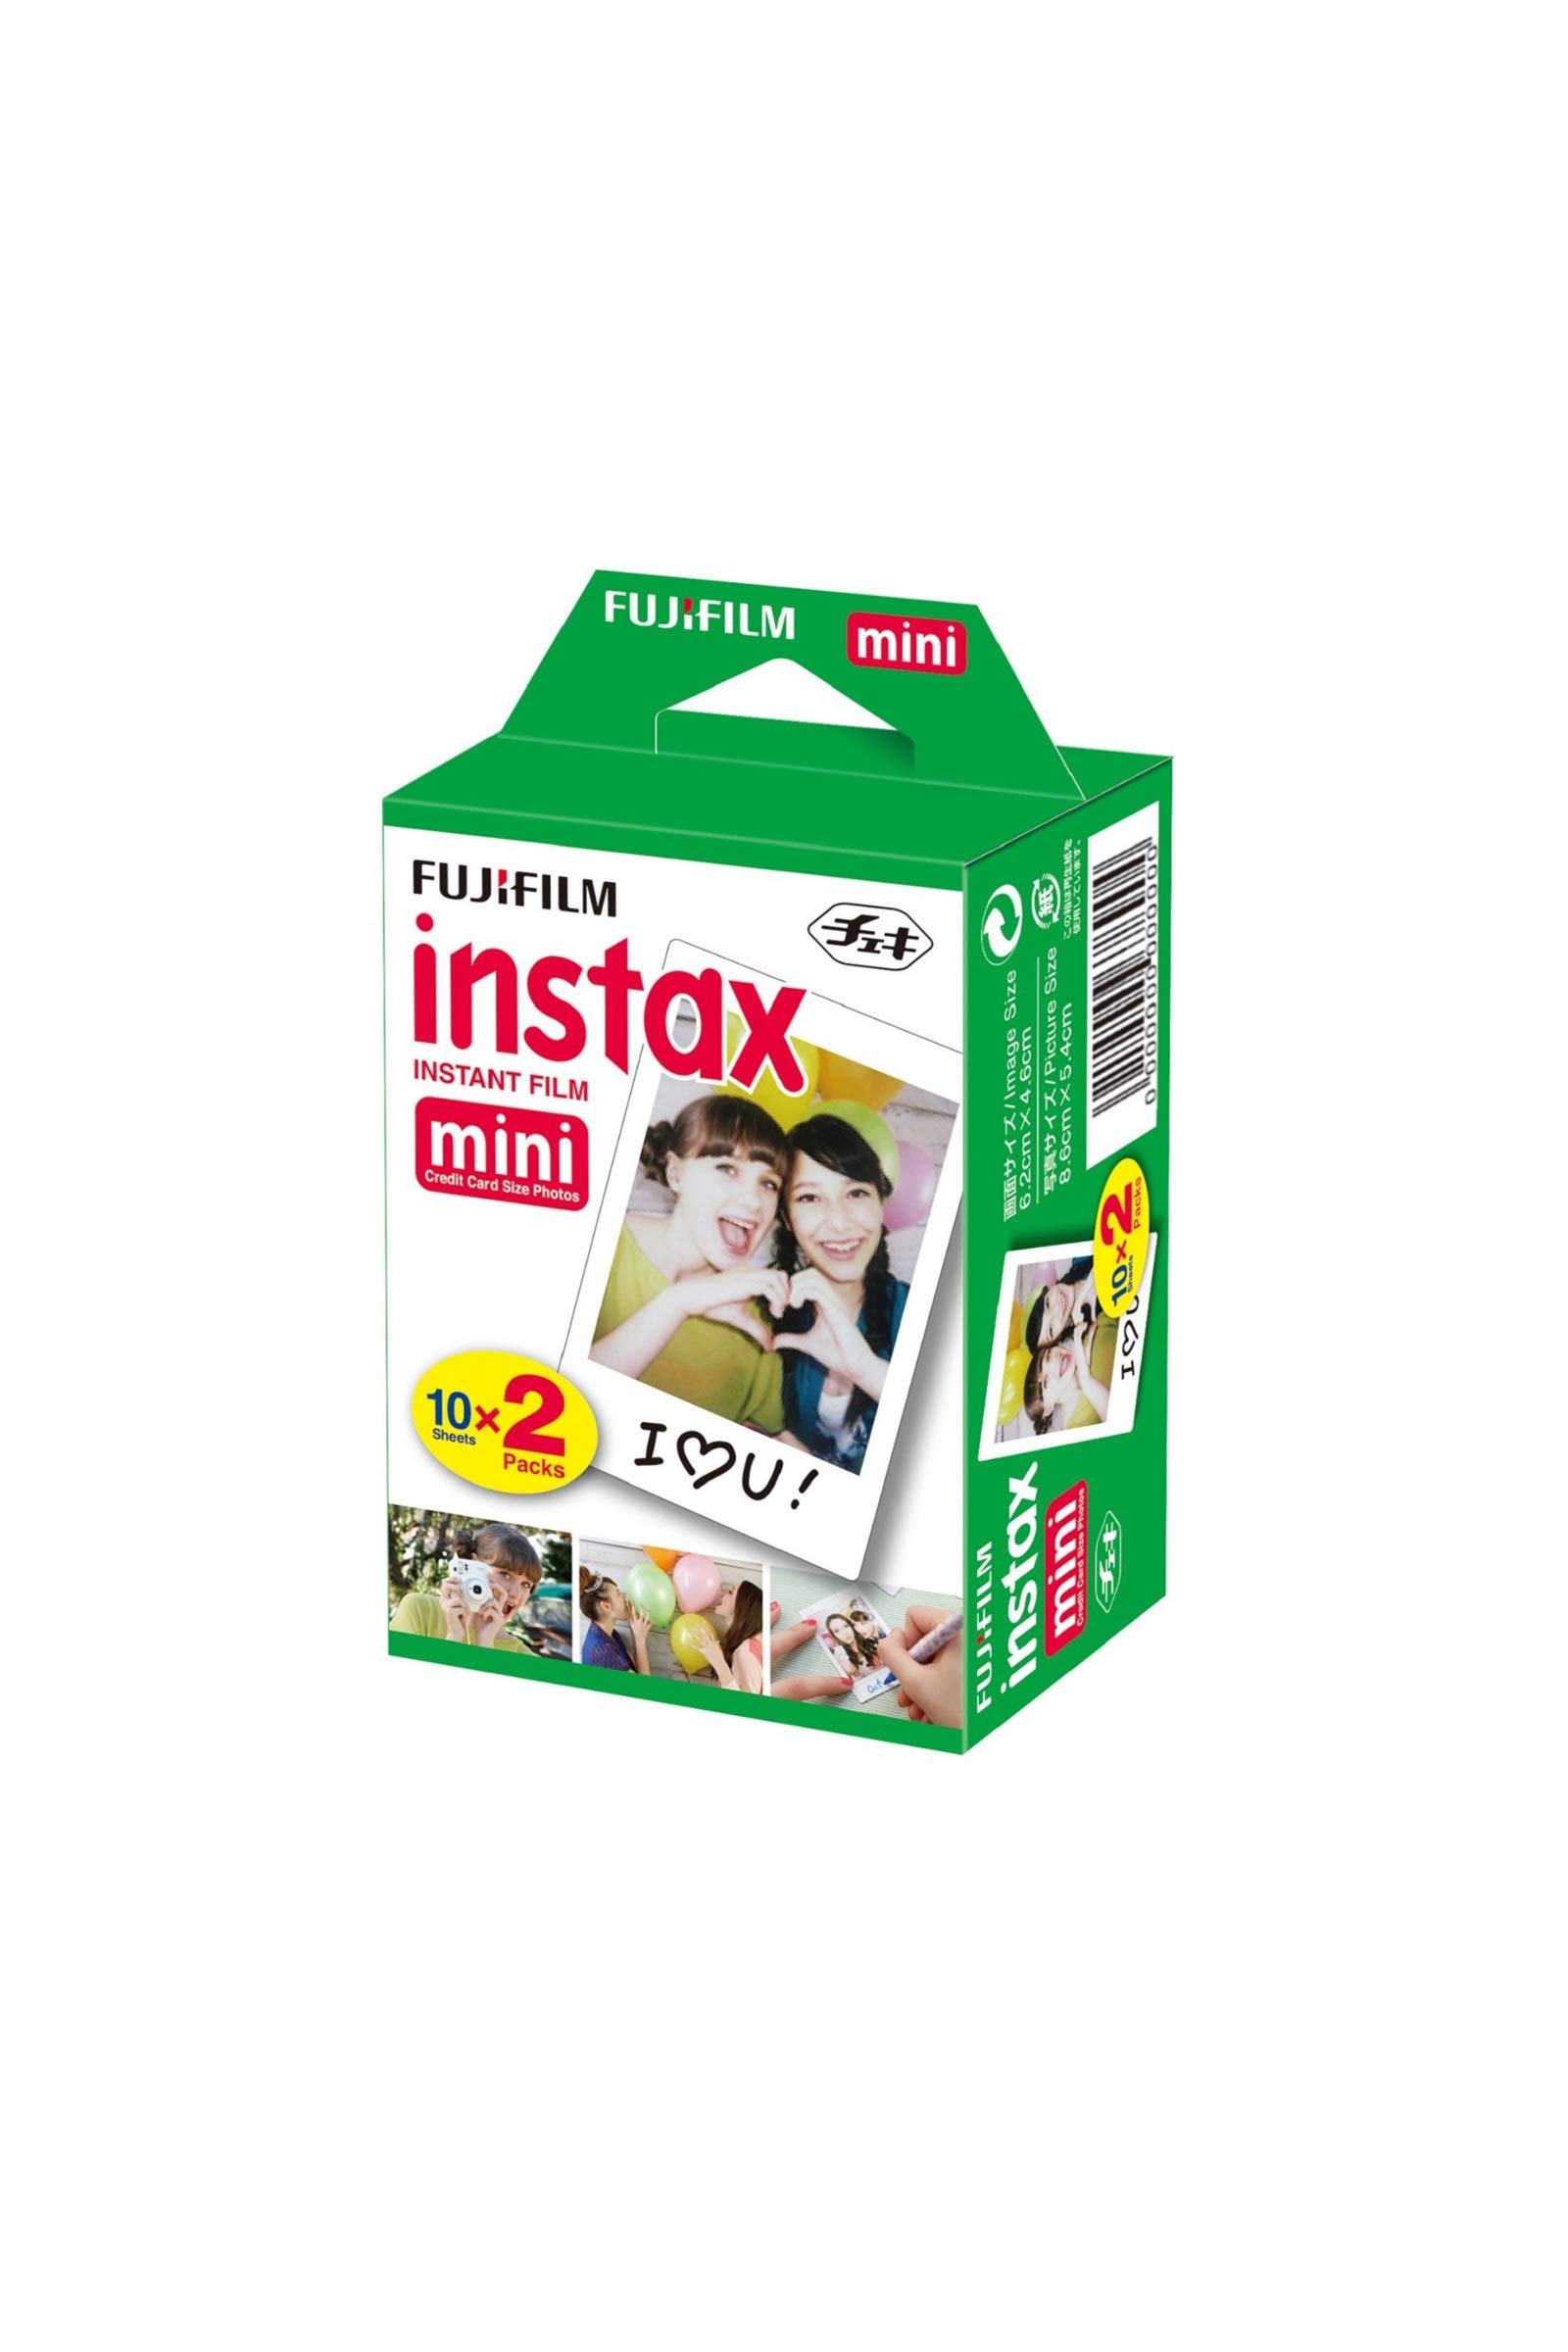 Fujifilm Instax Mini 40 Instant Camera with Film, Album, Stickers and Microfiber Cloth